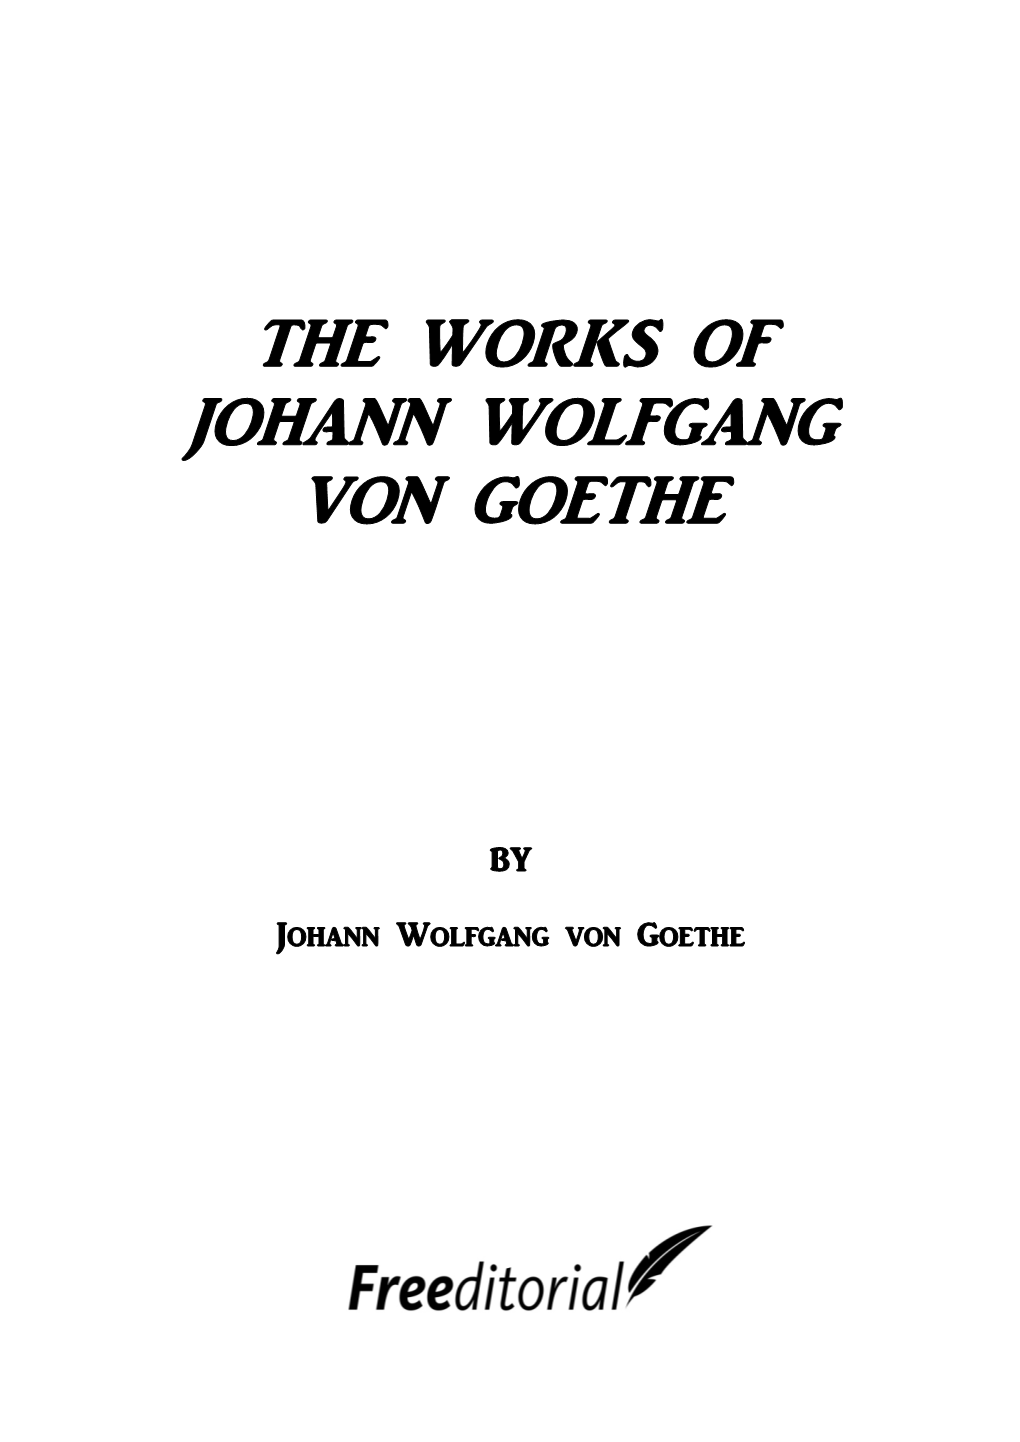 The Works of Johann Wolfgang Von Goethe